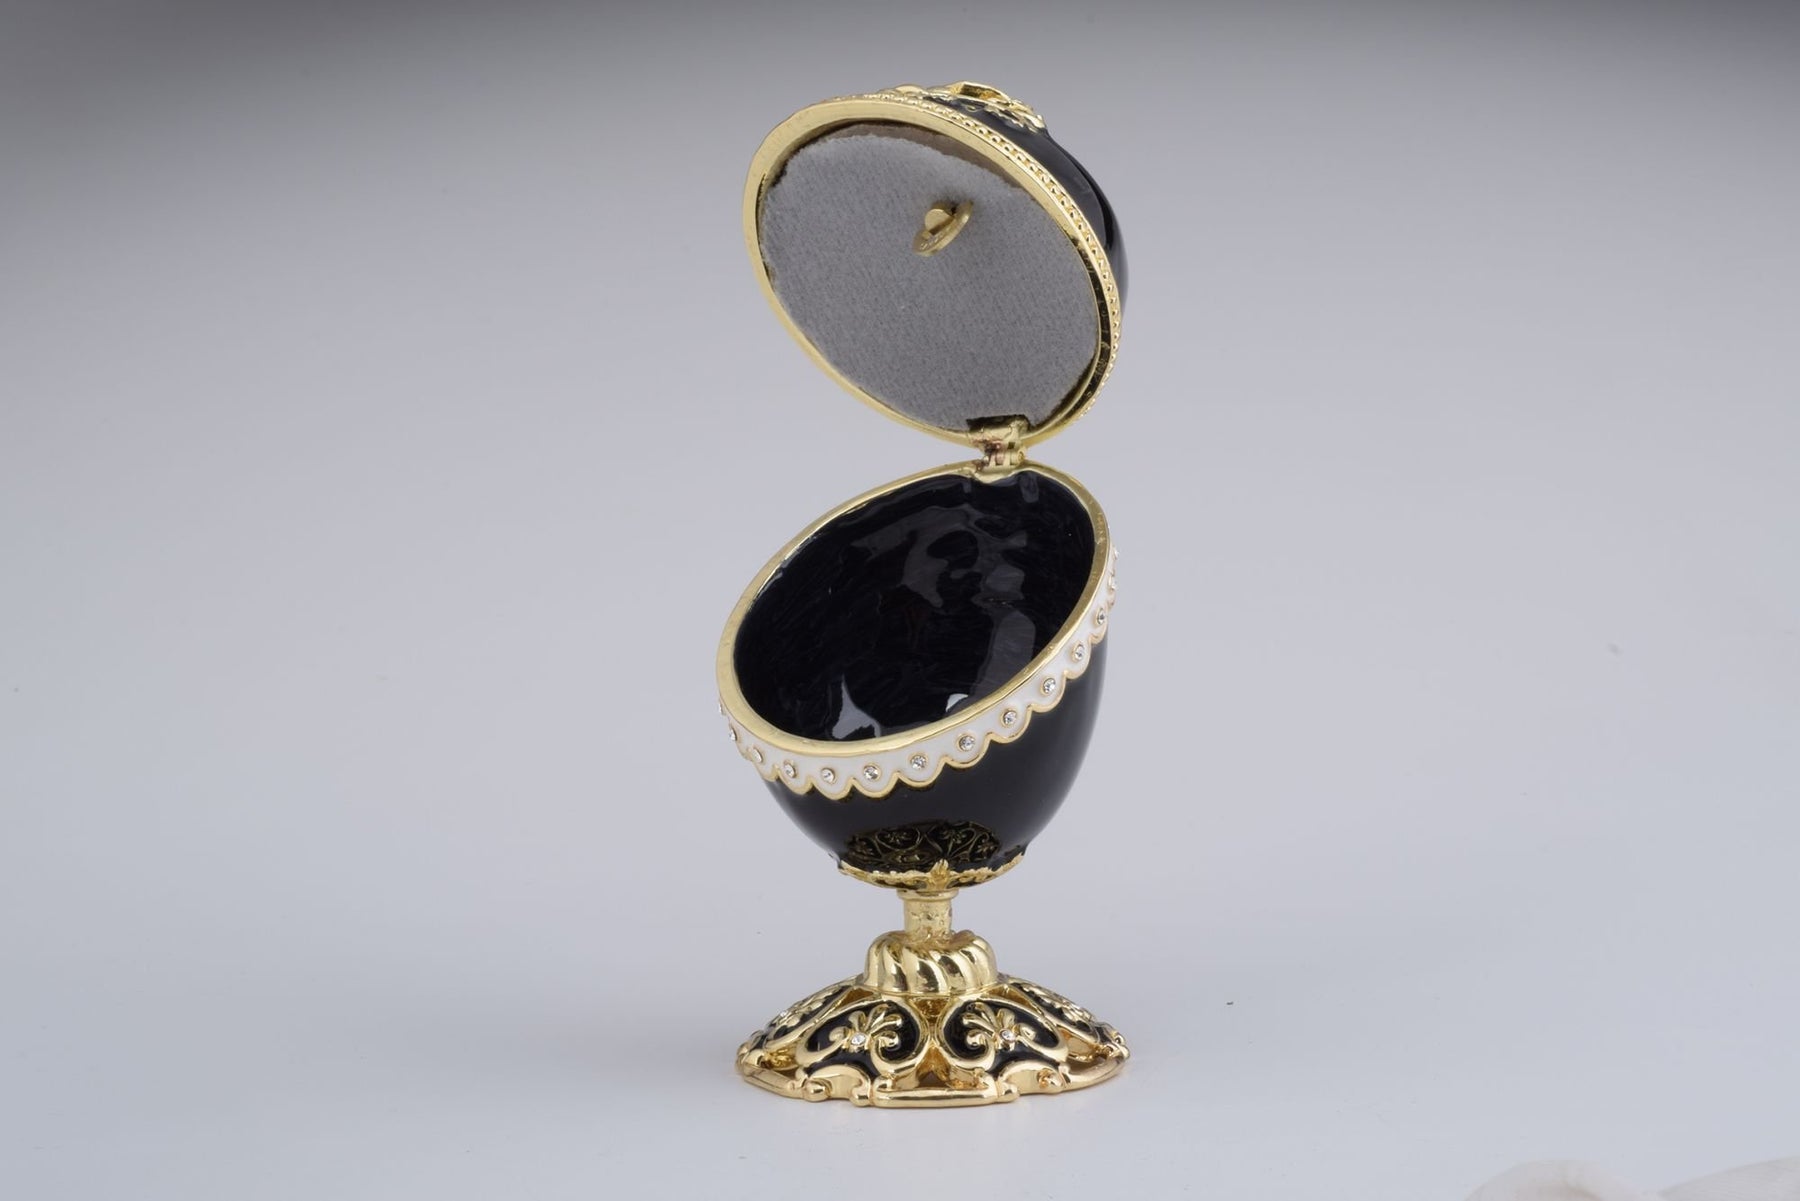 Keren Kopal Golden Black Royal Faberge Egg  86.50